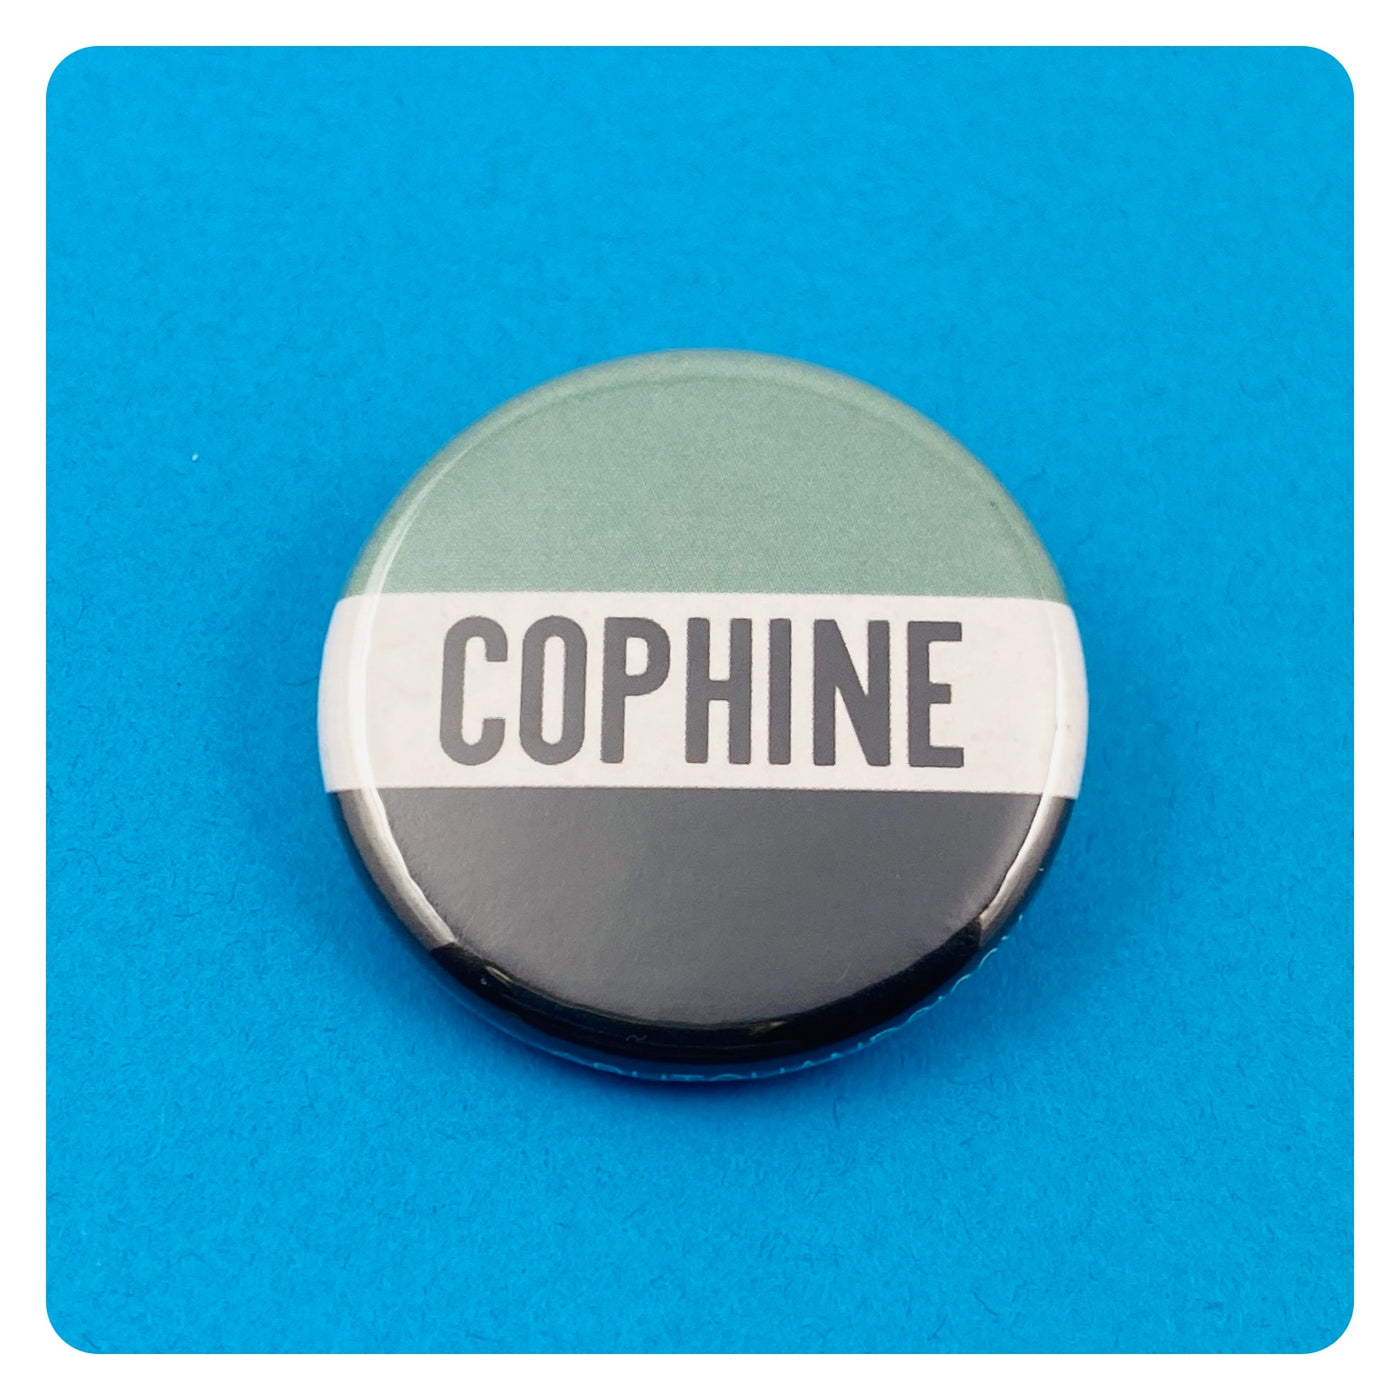 Cophine Ship Button